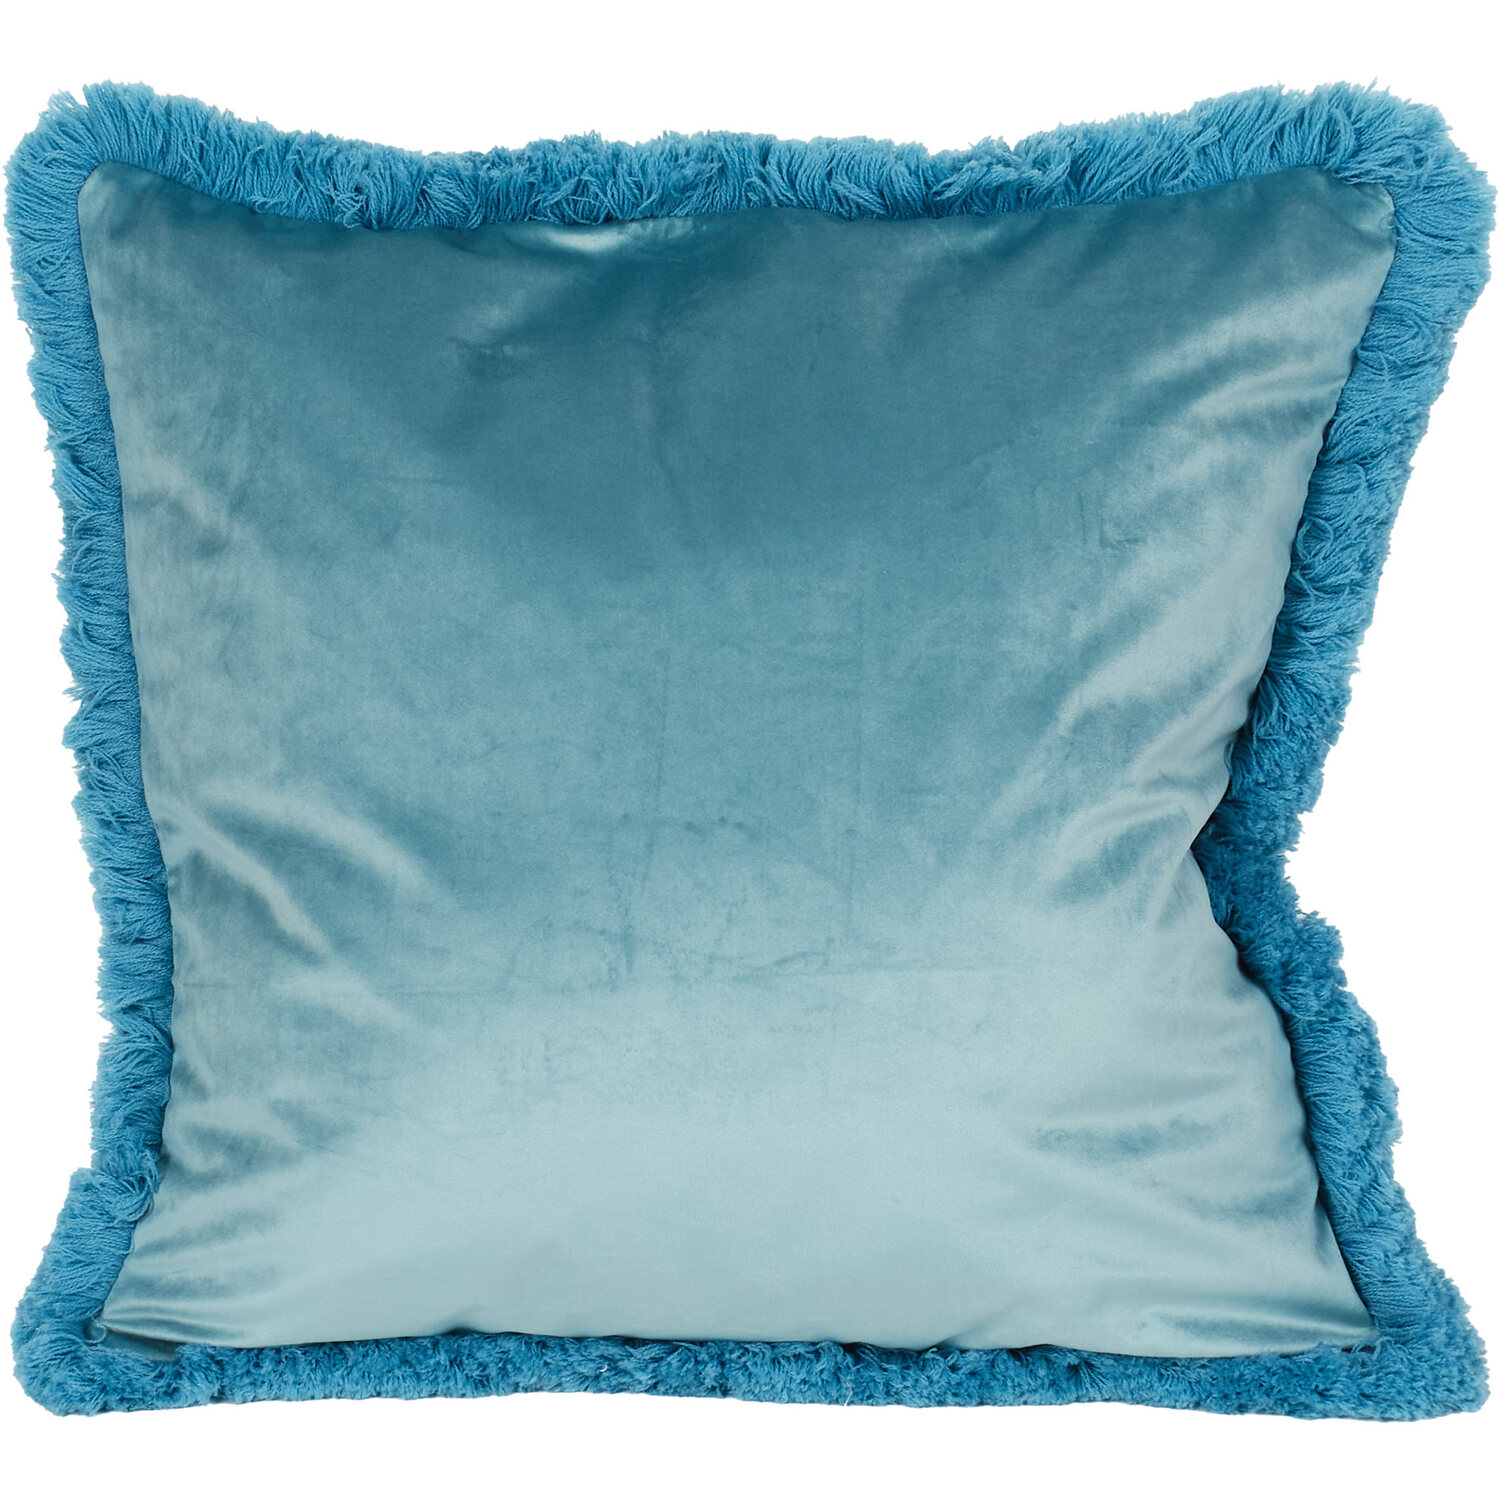 Axton Velvet Fringed Cushion - Teal Image 1